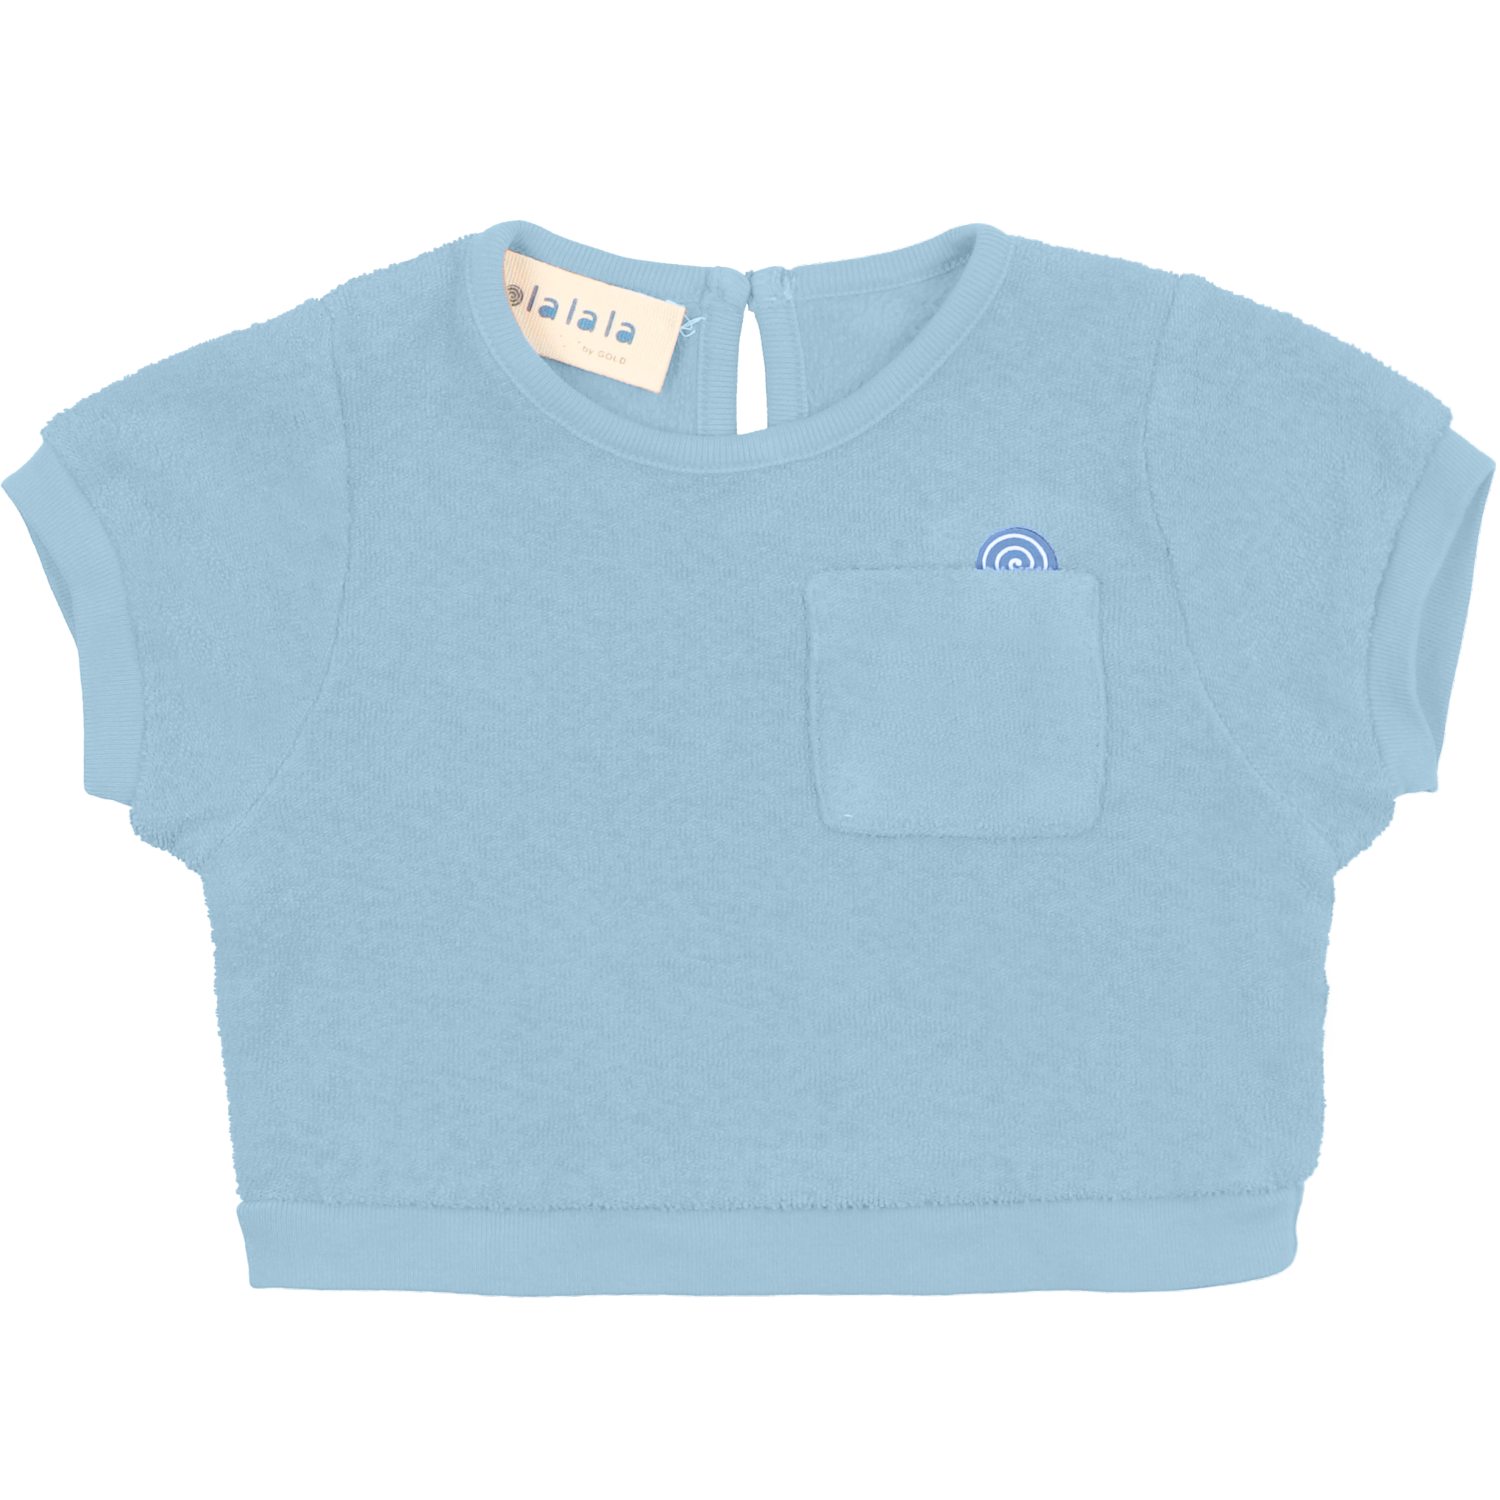 SARAH - Sponse sweater cool blue